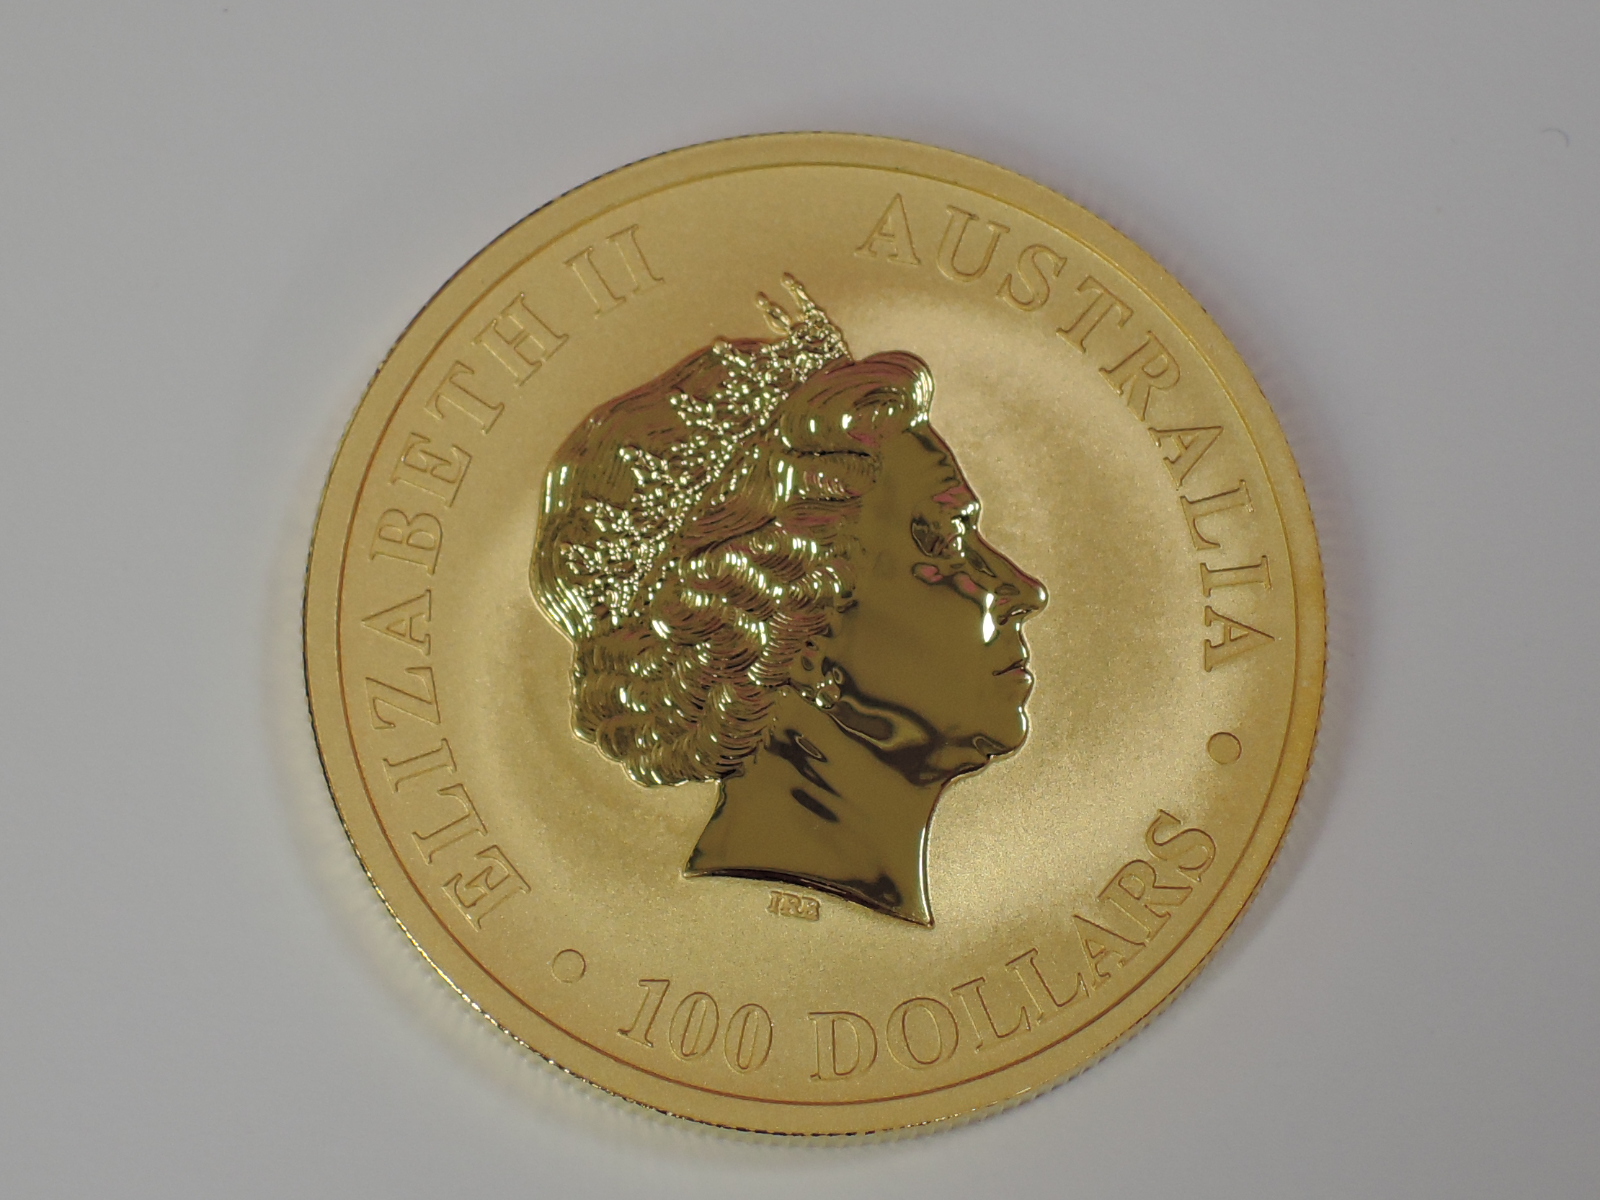 A gold 1oz 2017 100 dollar Australian Kangaroo coin, in plastic case - Image 2 of 2